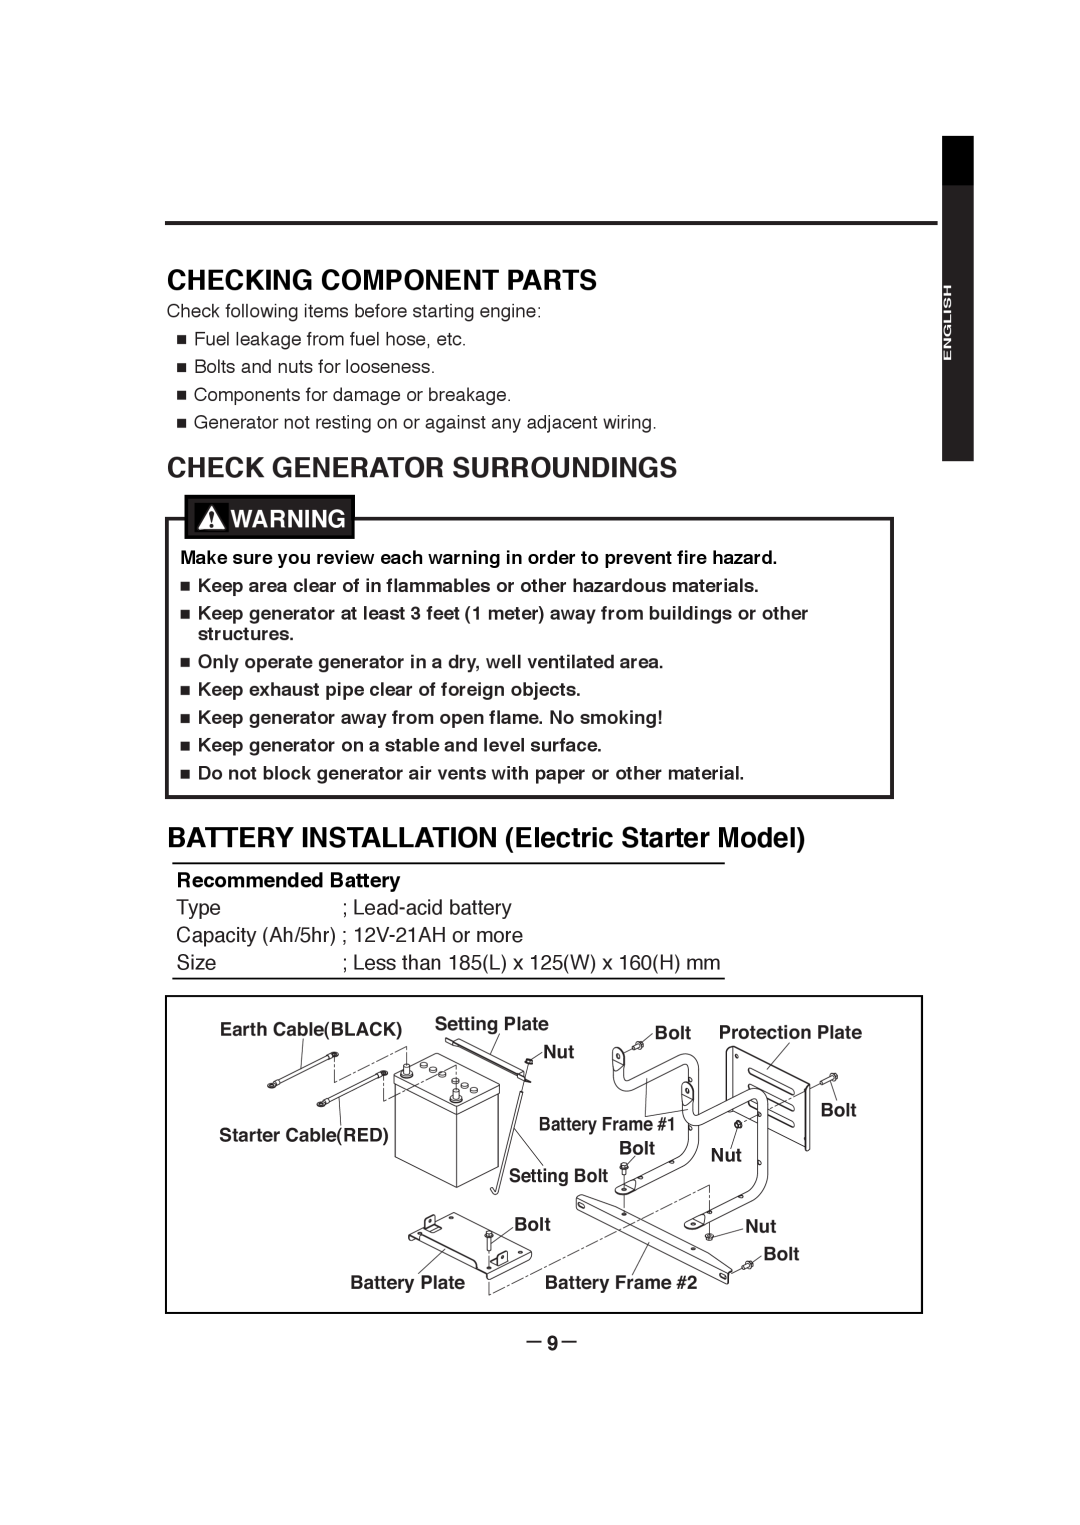 Subaru RGX7100 Checking Component Parts, Check Generator Surroundings, BATTERY INSTALLATION Electric Starter Model, － 9－ 